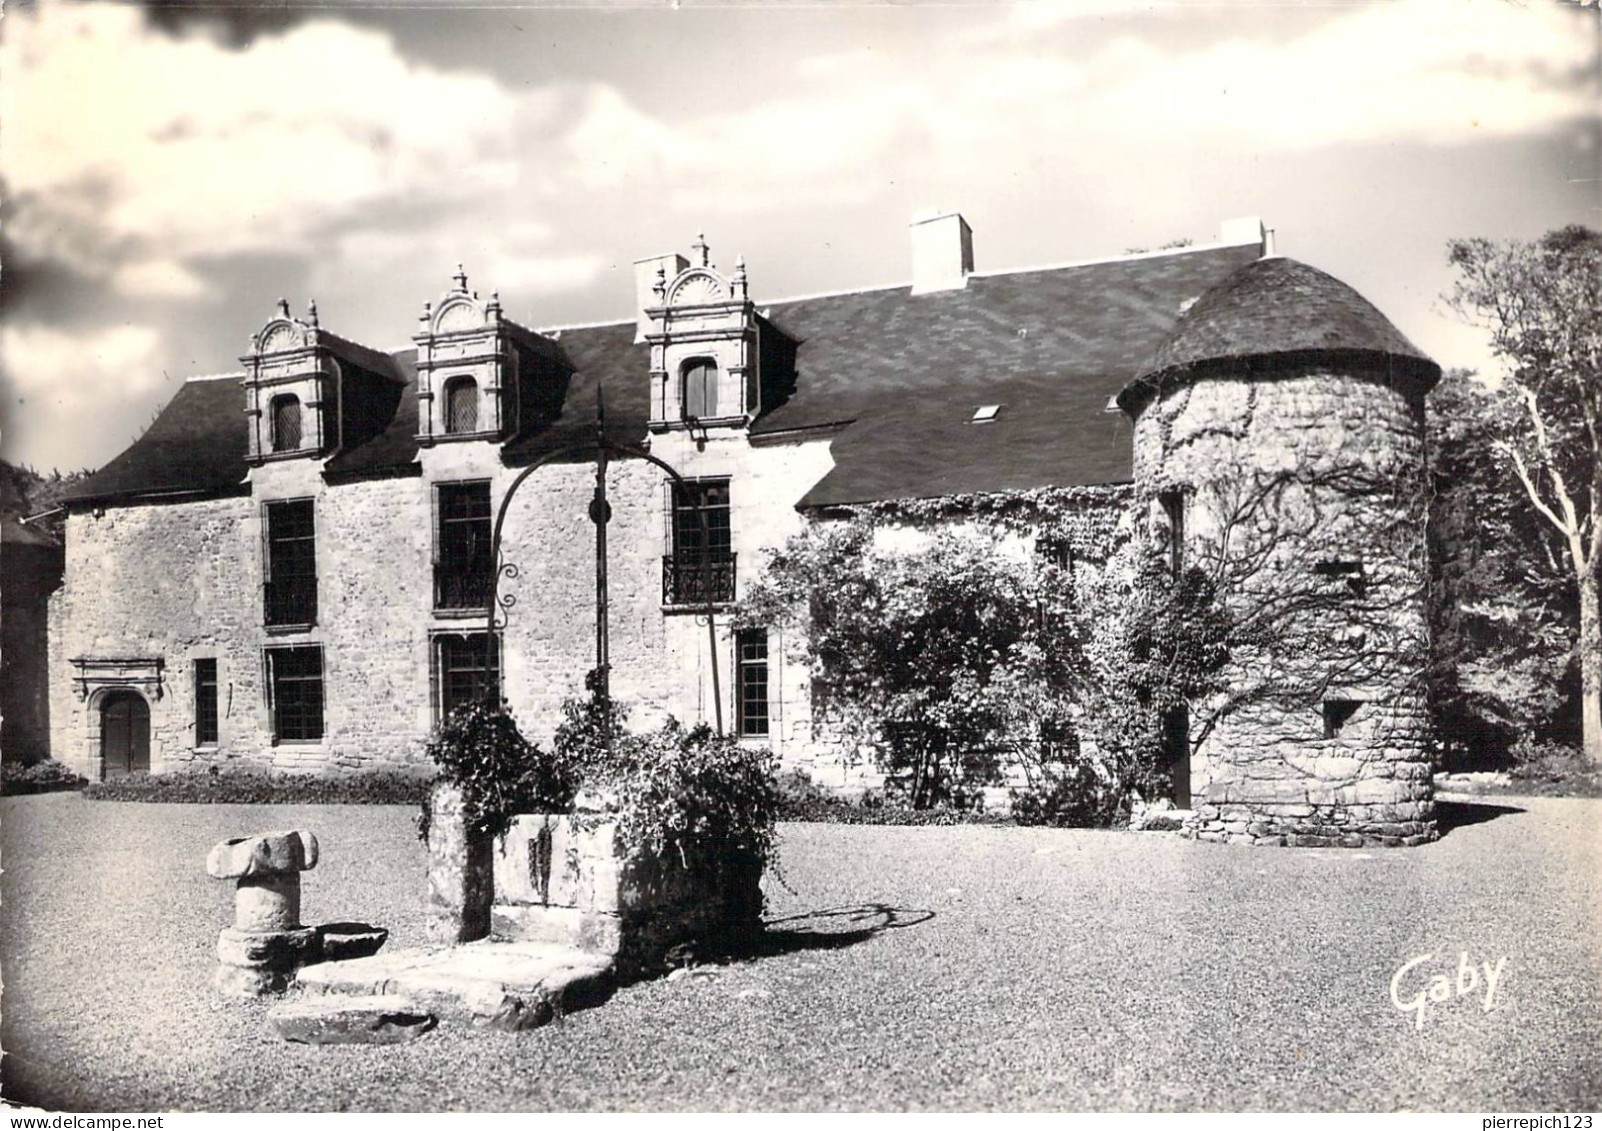 44 - Guérande - Château De Careil - Façade Du XVIe Siècle - Guérande